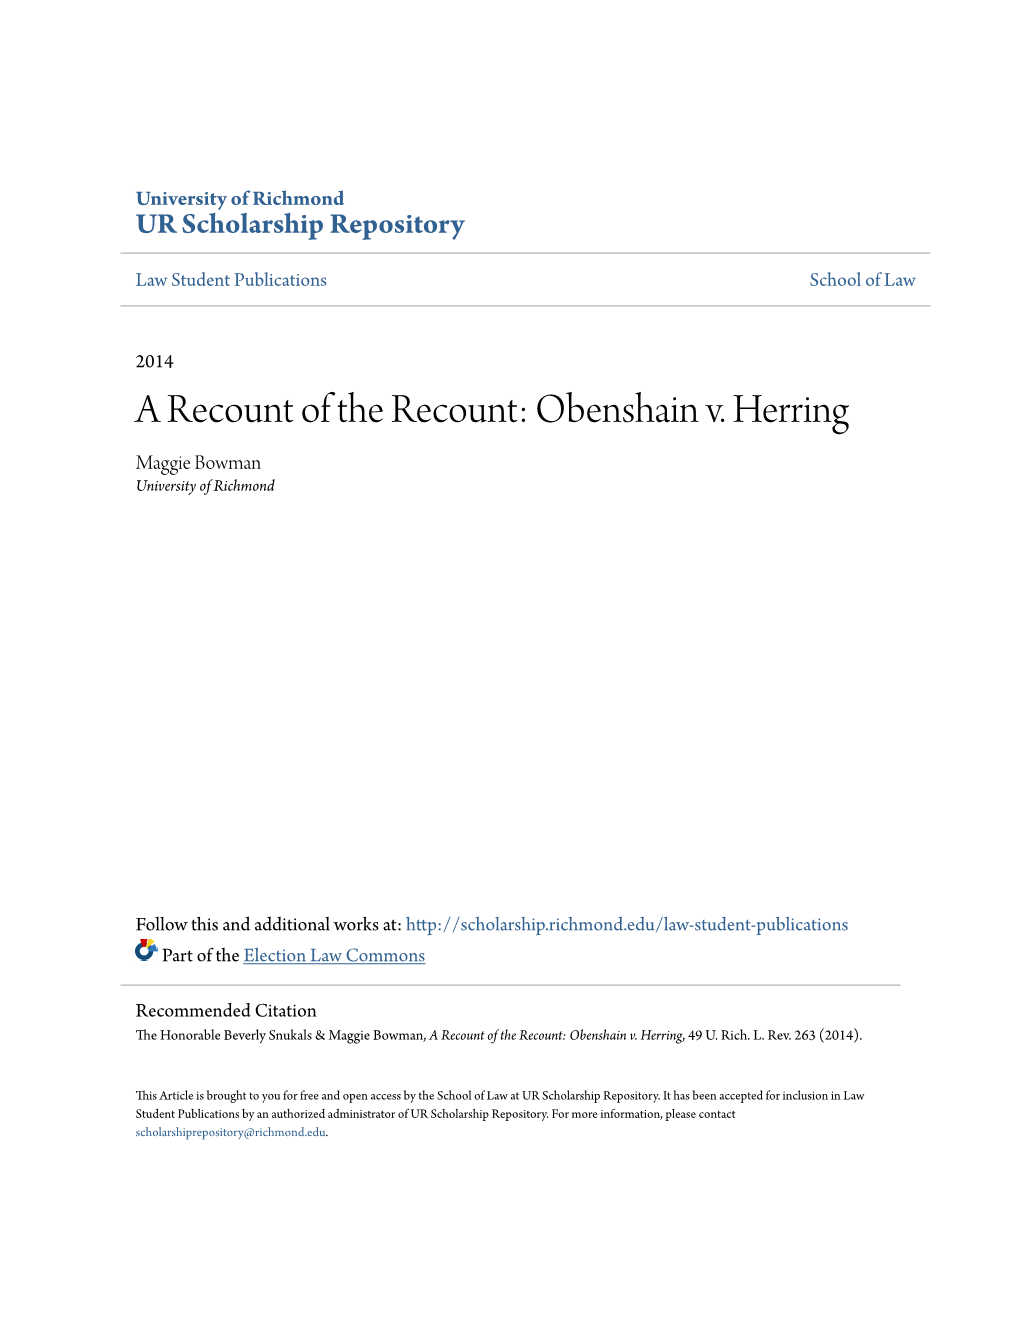 A Recount of the Recount: Obenshain V. Herring Maggie Bowman University of Richmond